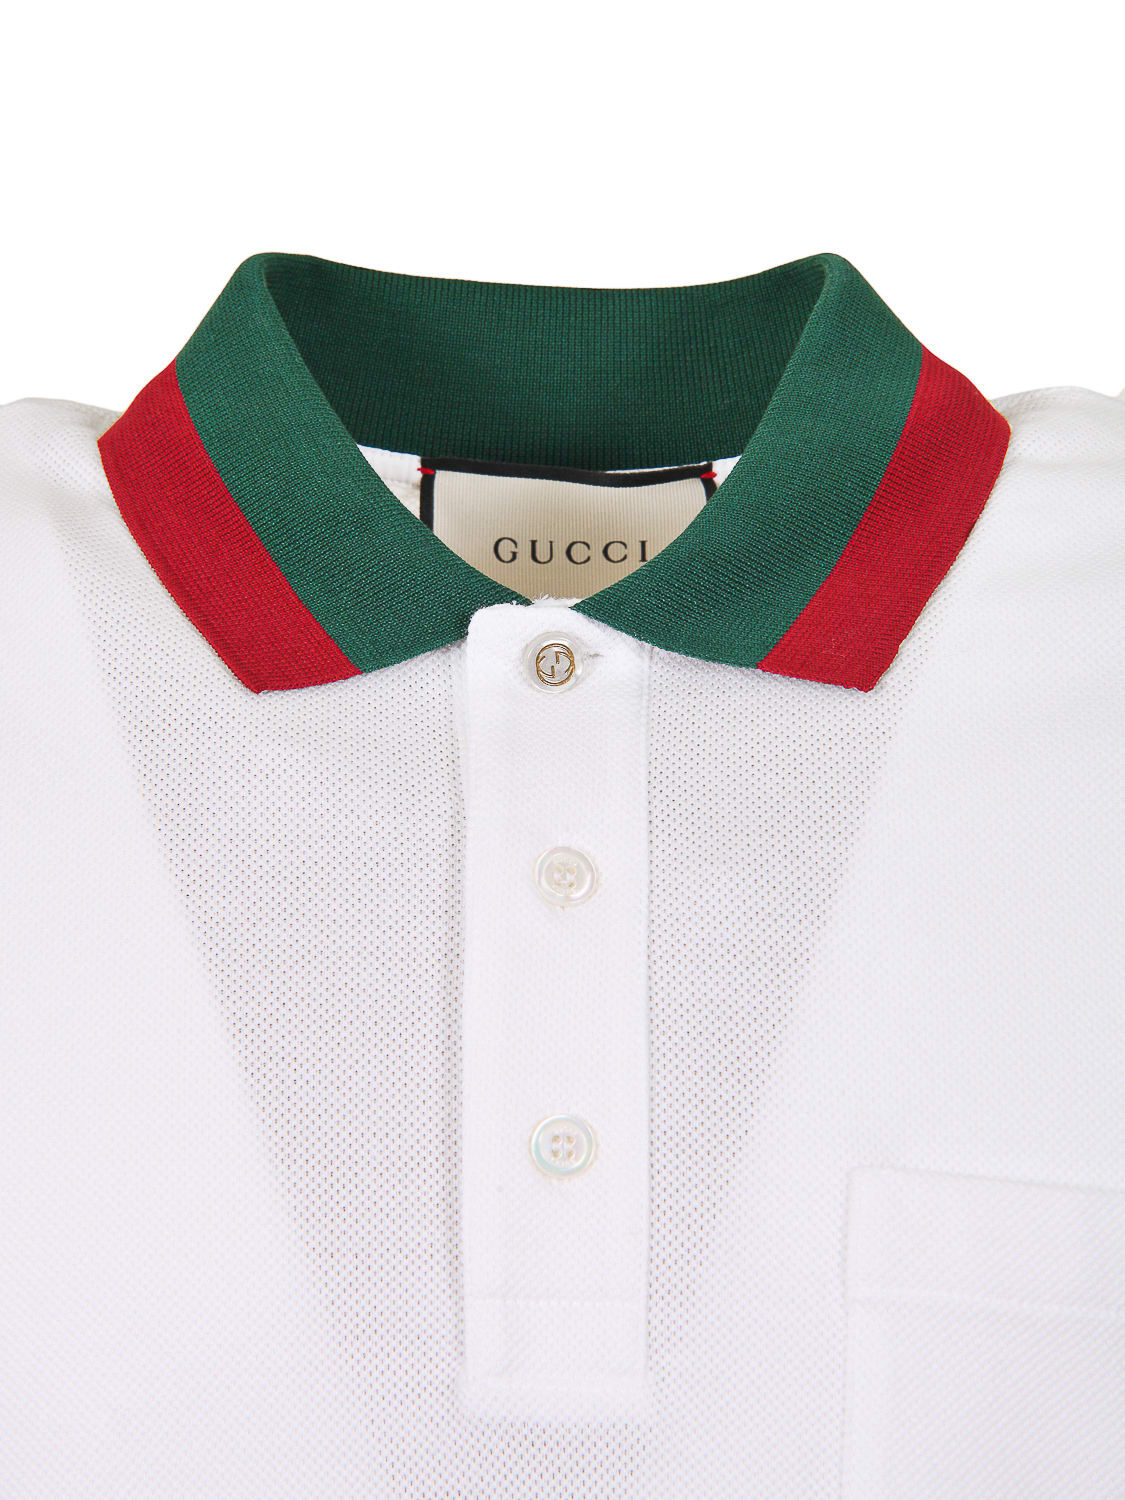 Gucci Polo Shirts Italist Always Like A Sale - 948b3f858a high fashion gucci polo white shirt roblox